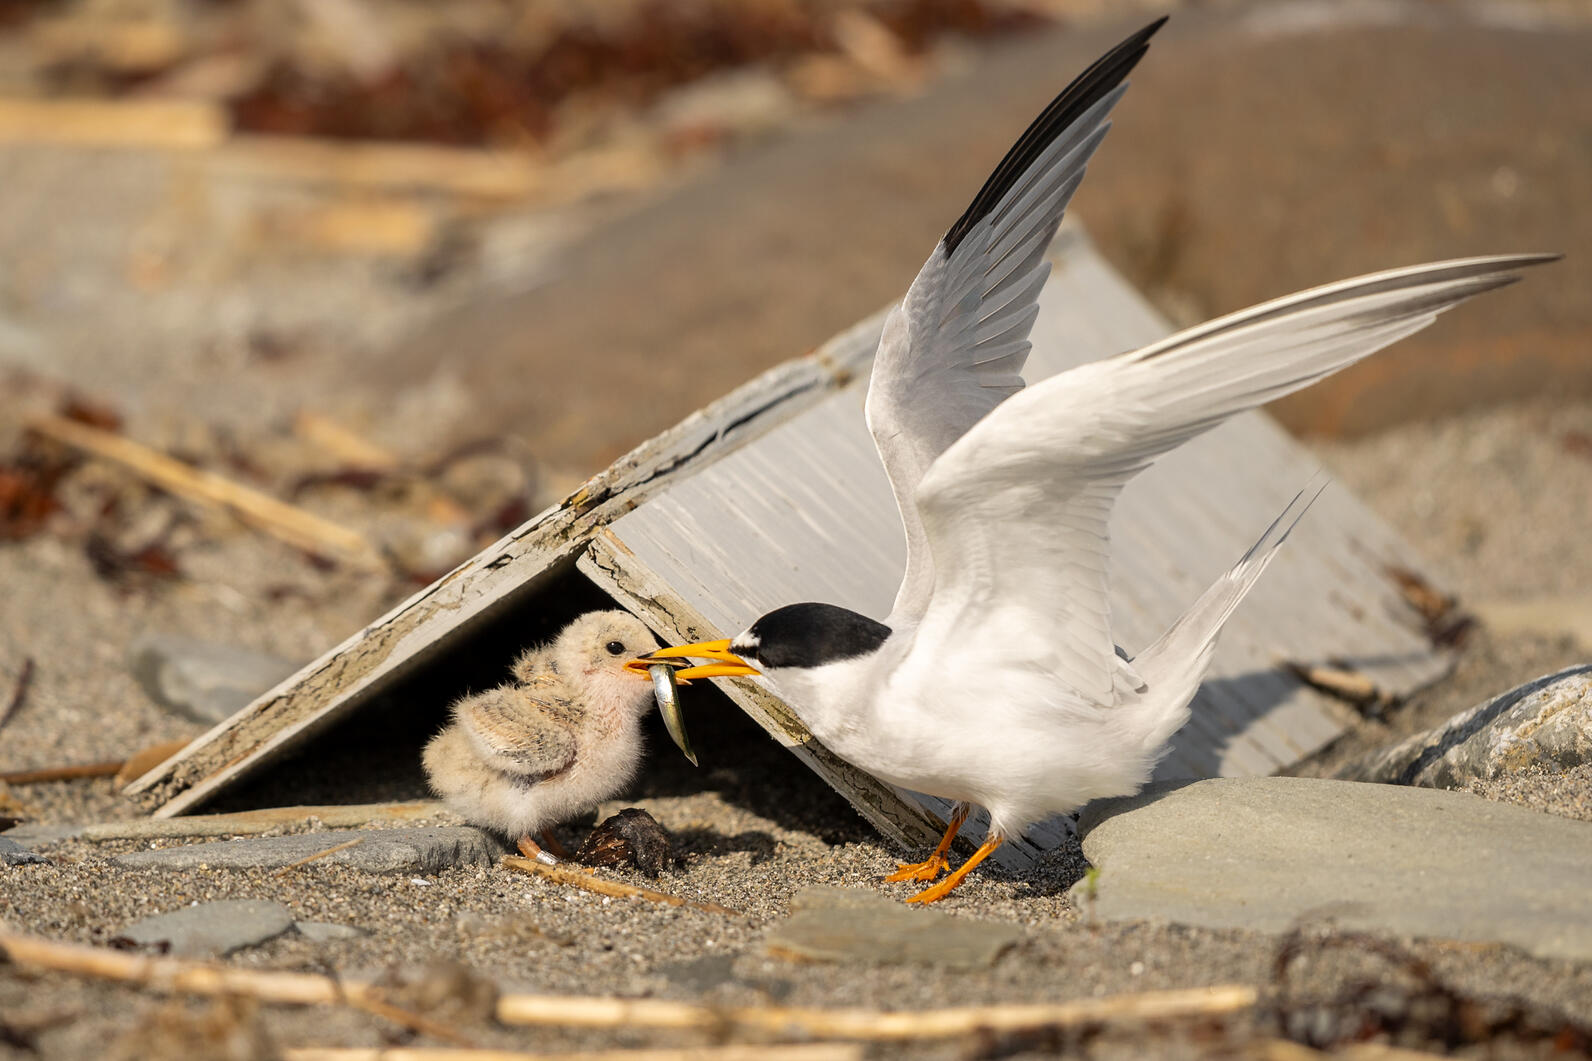 Least Tern feeding chick a meal